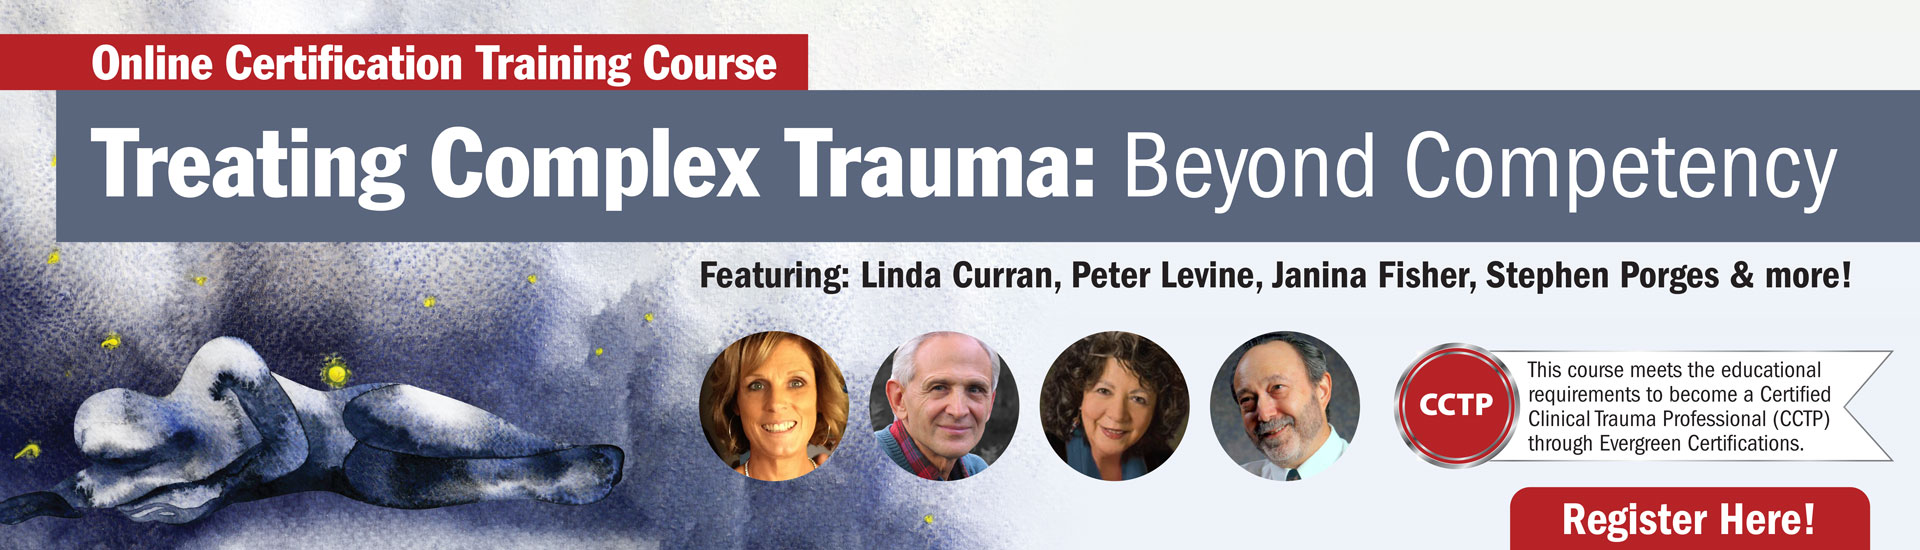 Treating Complex Trauma: Beyond Competency